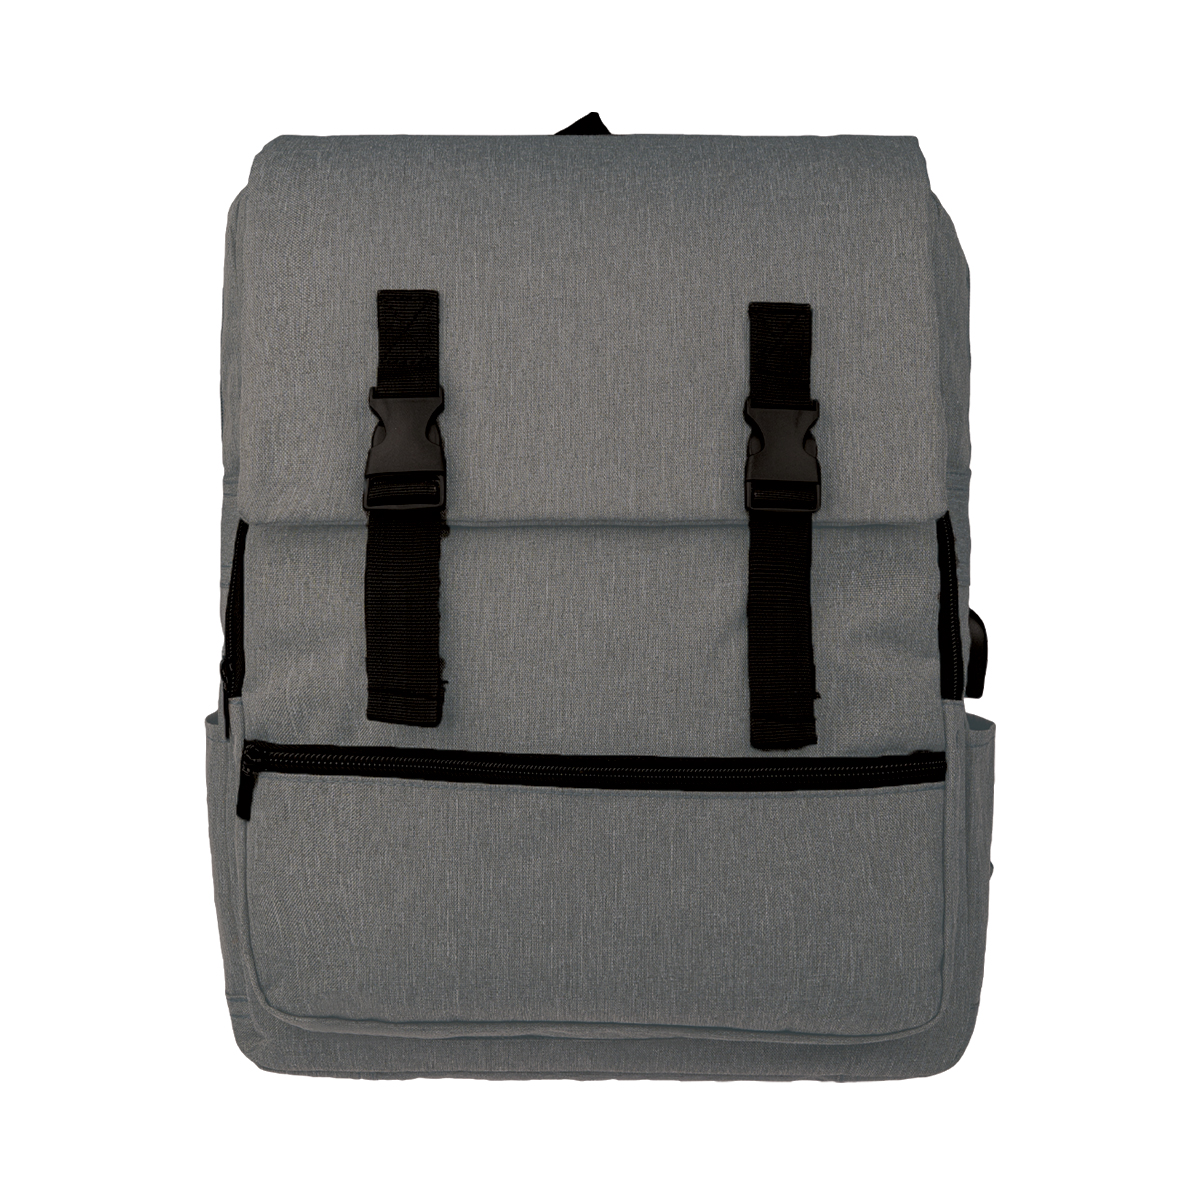 Pescara Laptop Backpack Product Image